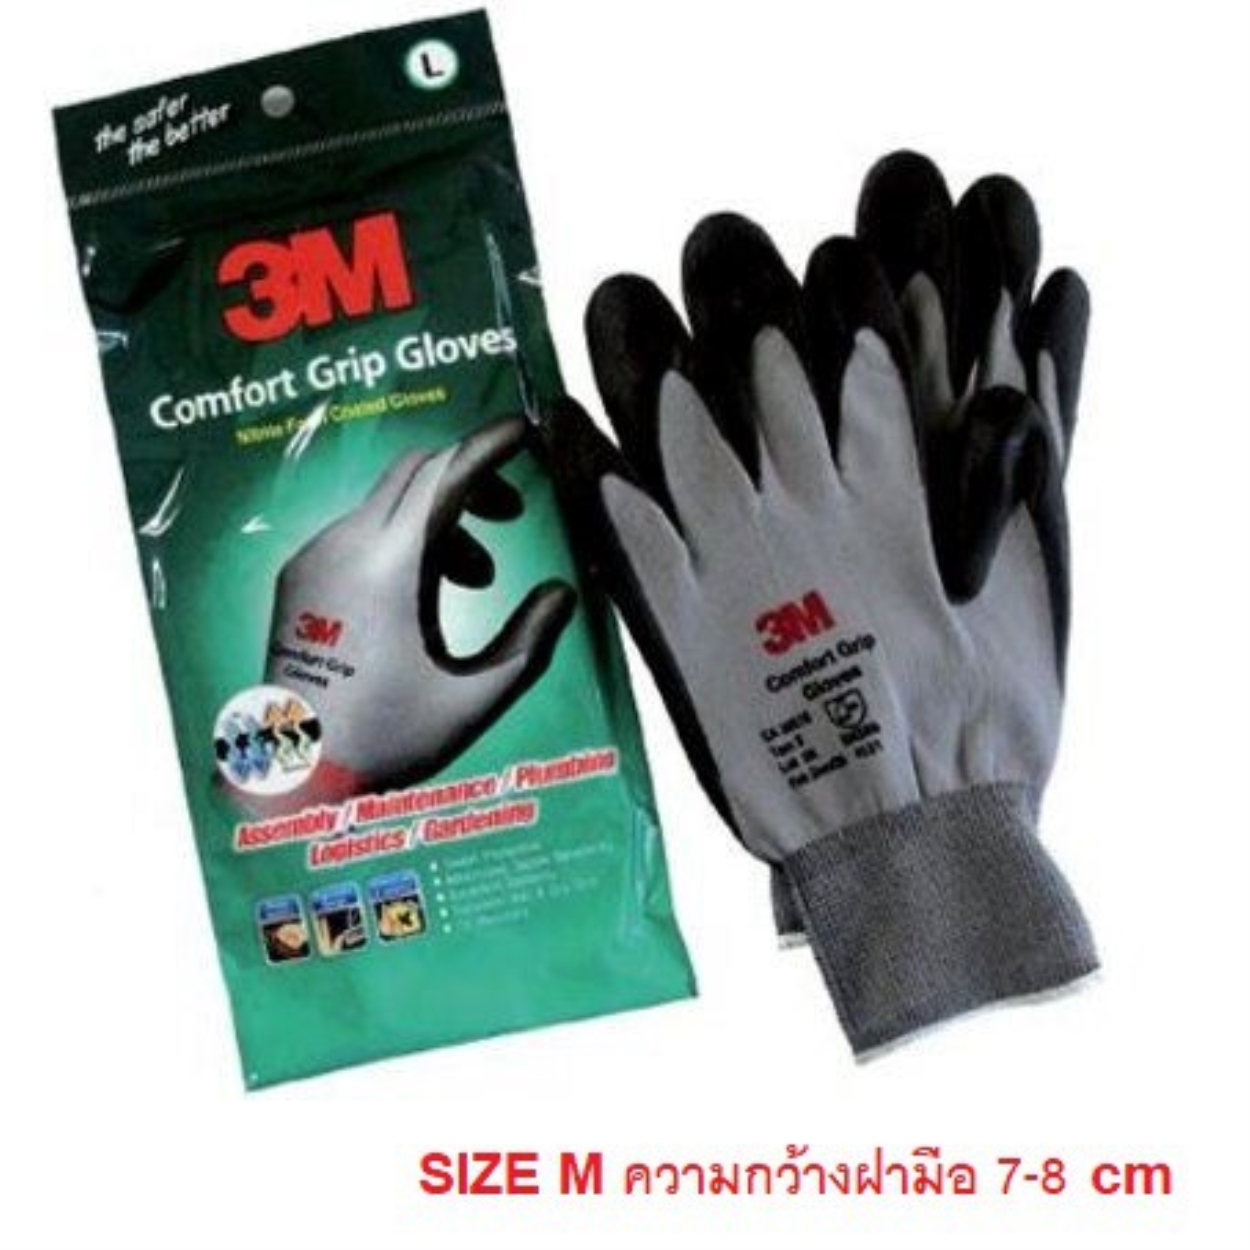 3M ถุงมือ Comfort Grip Gloves ถุงมือกันลื่น ถุงมือกันบาด ถุงมือจับของ